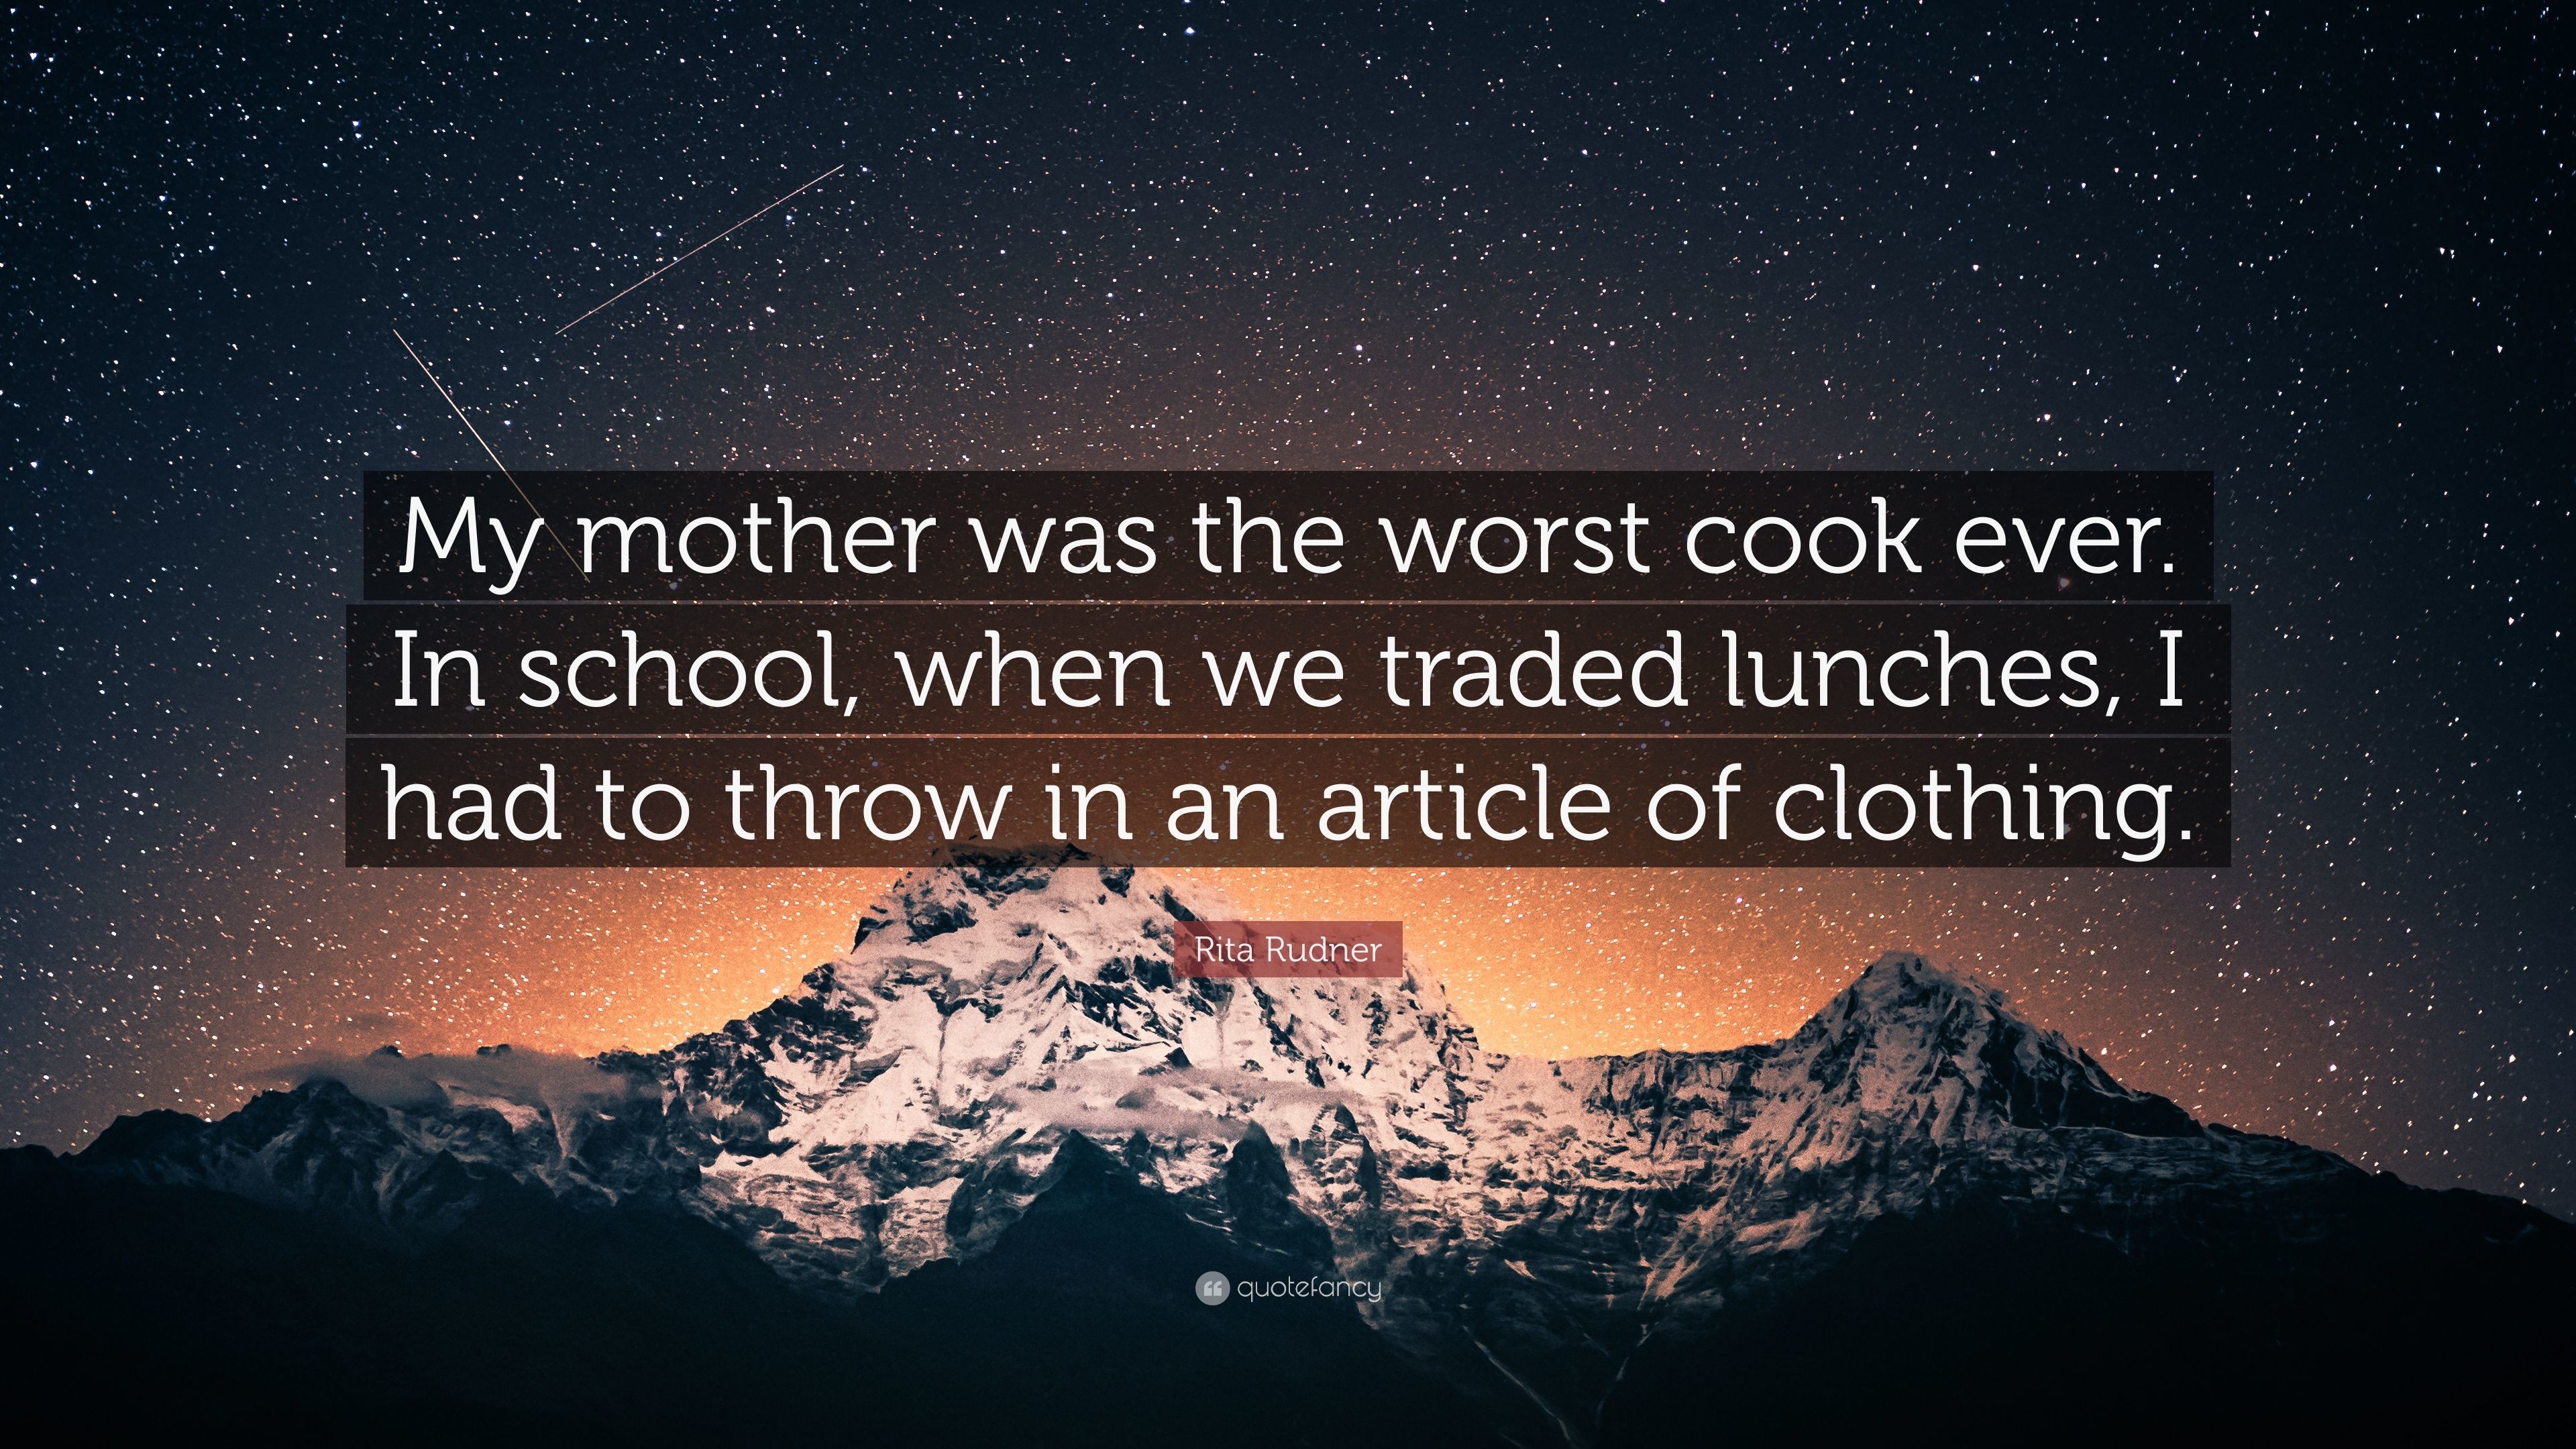 3840x2160 Rita Rudner Quote: “My mother was the worst cook ever. In school,